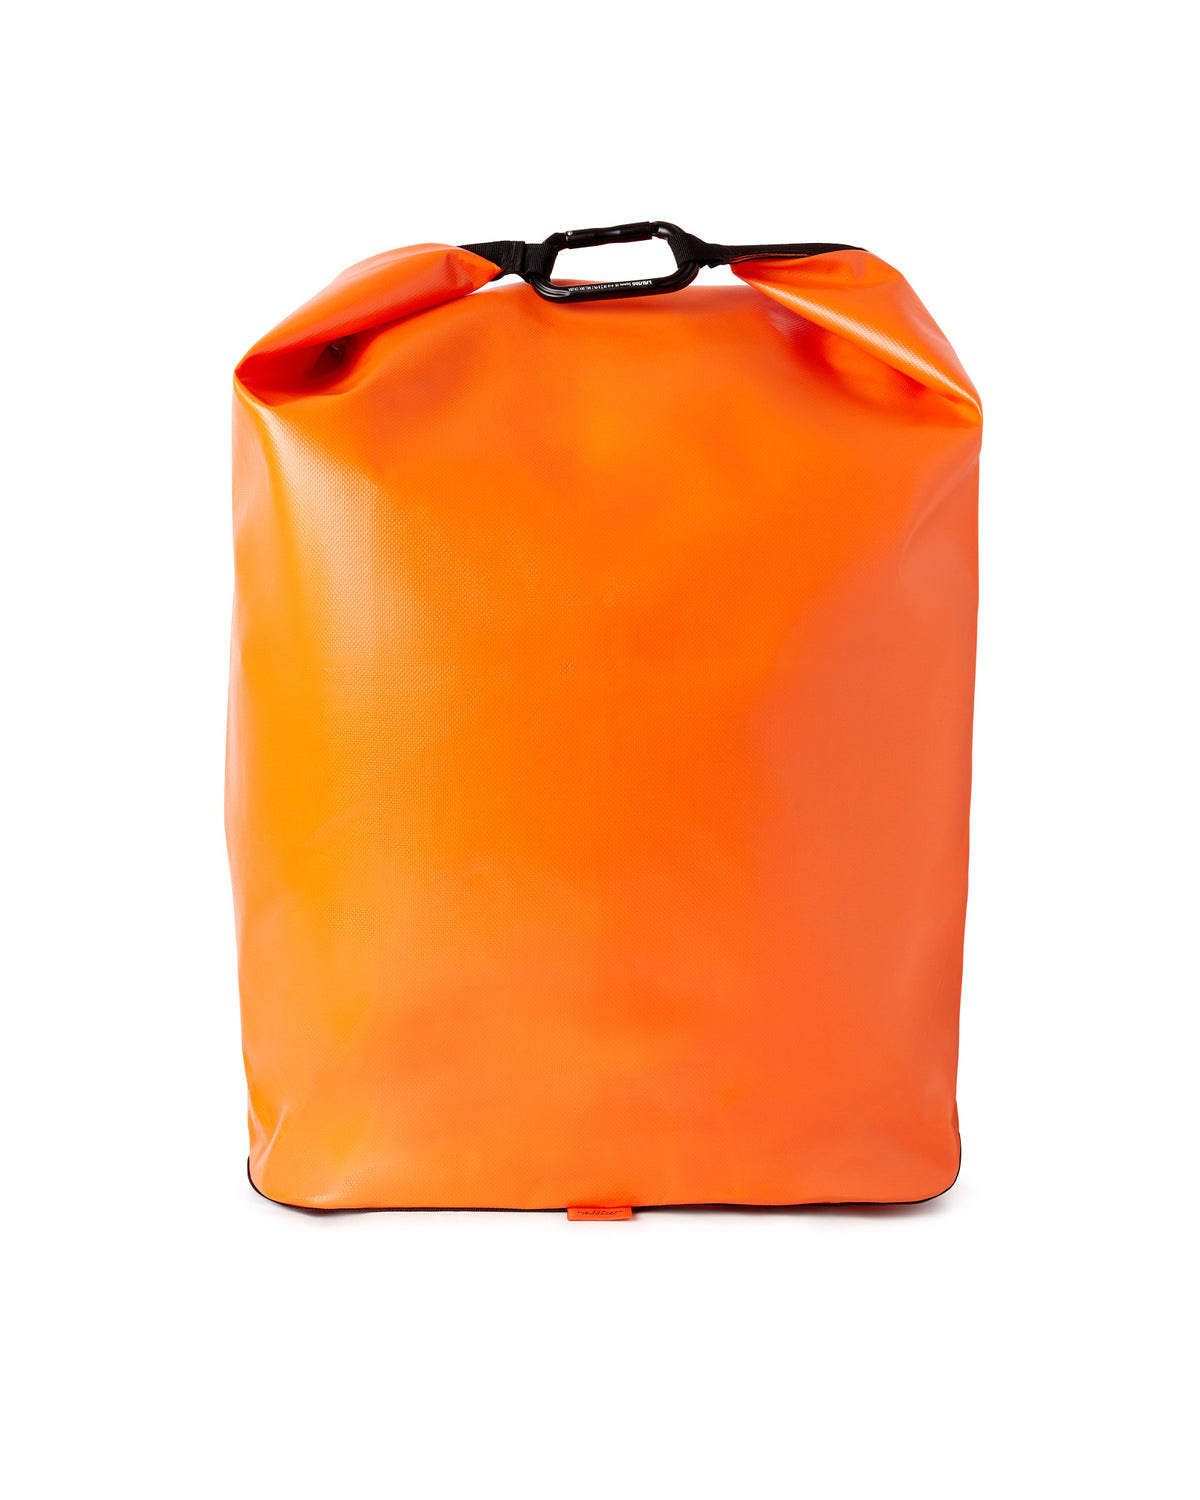 Nomad x Colfax Design Works Tire Bag